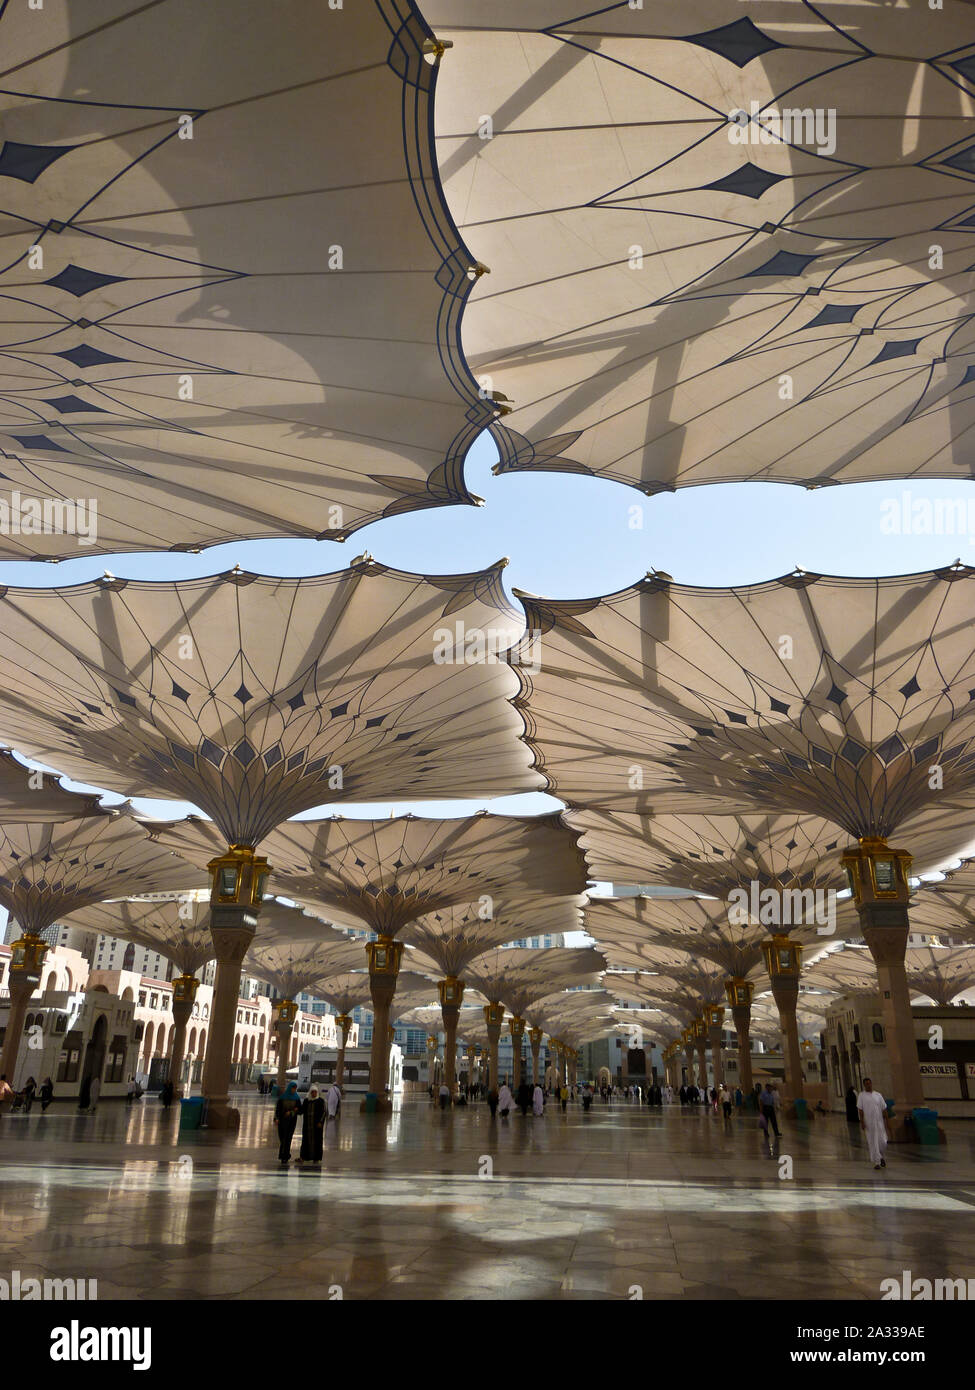 Gran sombrilla de la mezquita del Profeta ampliamente extendida bajo el sol Foto de stock